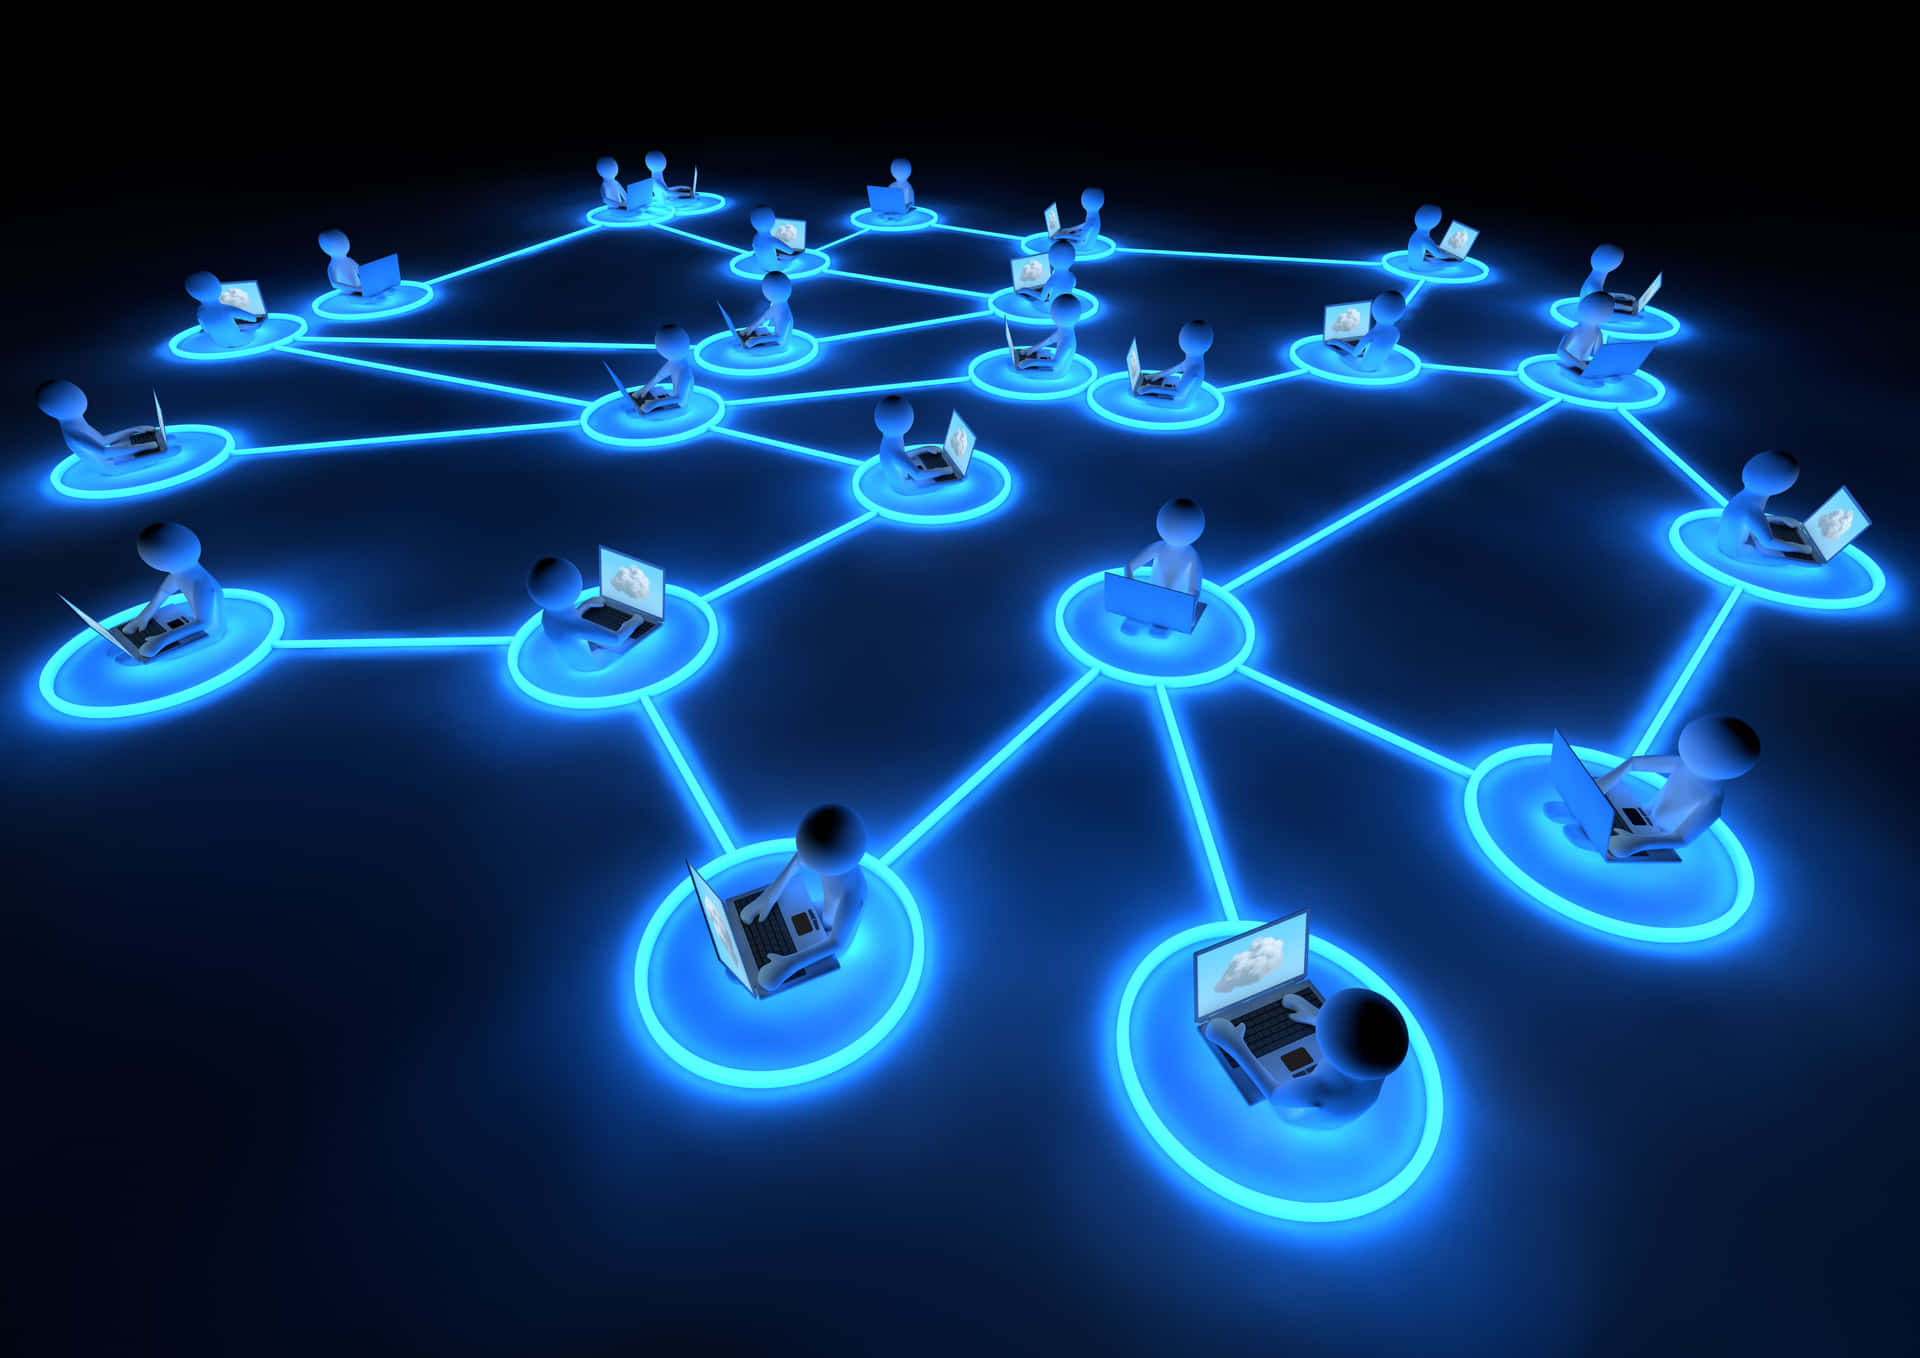 Digital Network Connectivity Concept Background